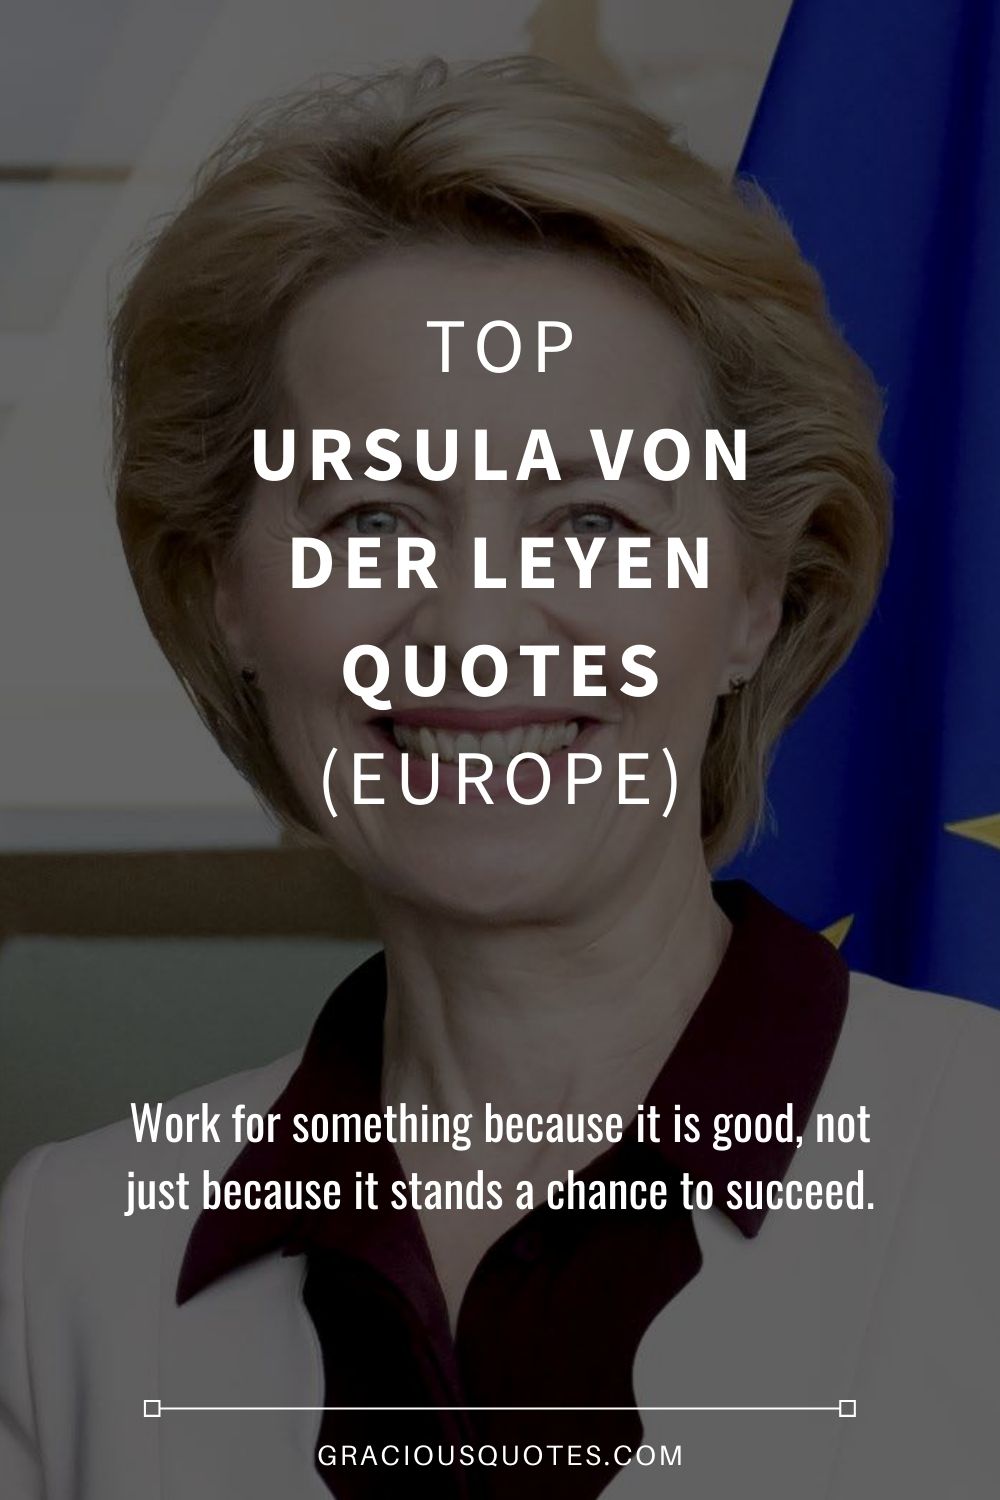 Top Ursula von der Leyen Quotes (EUROPE) - Gracious Quotes